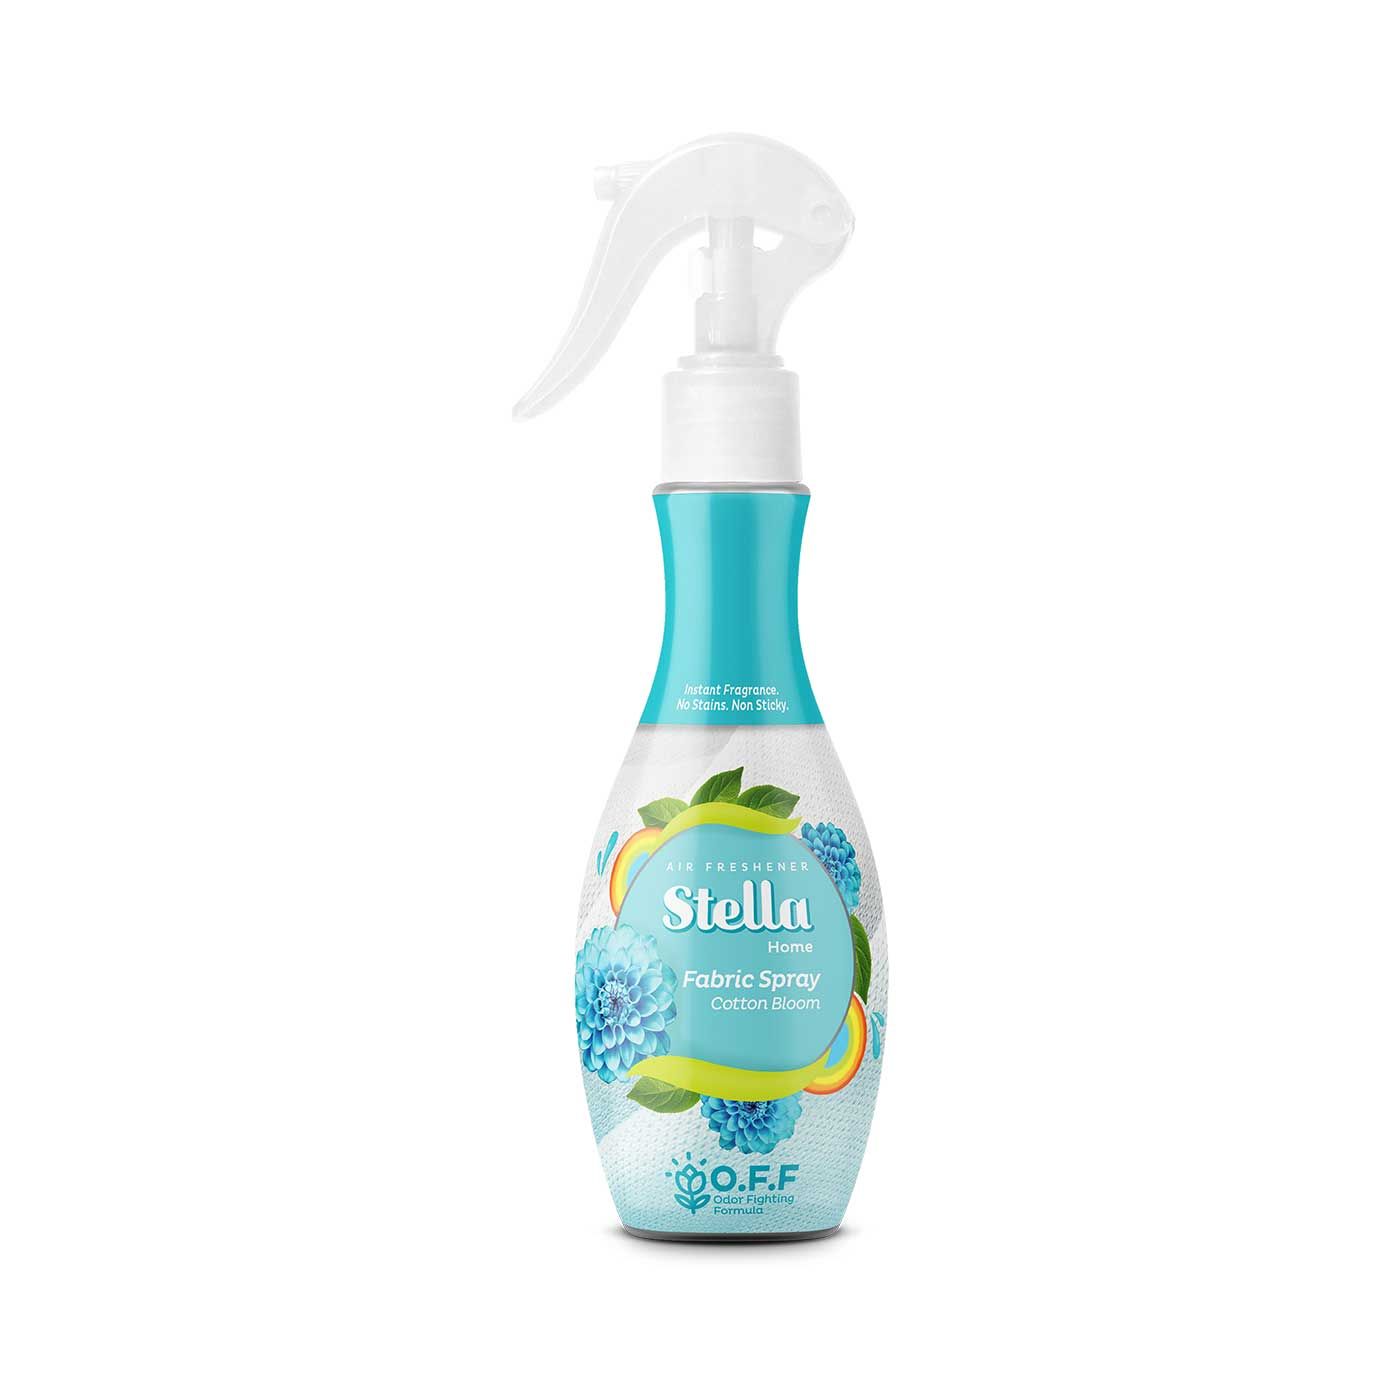 Stella Fresh Protect Fabric Spray Cotton Bloom 245ml - 1